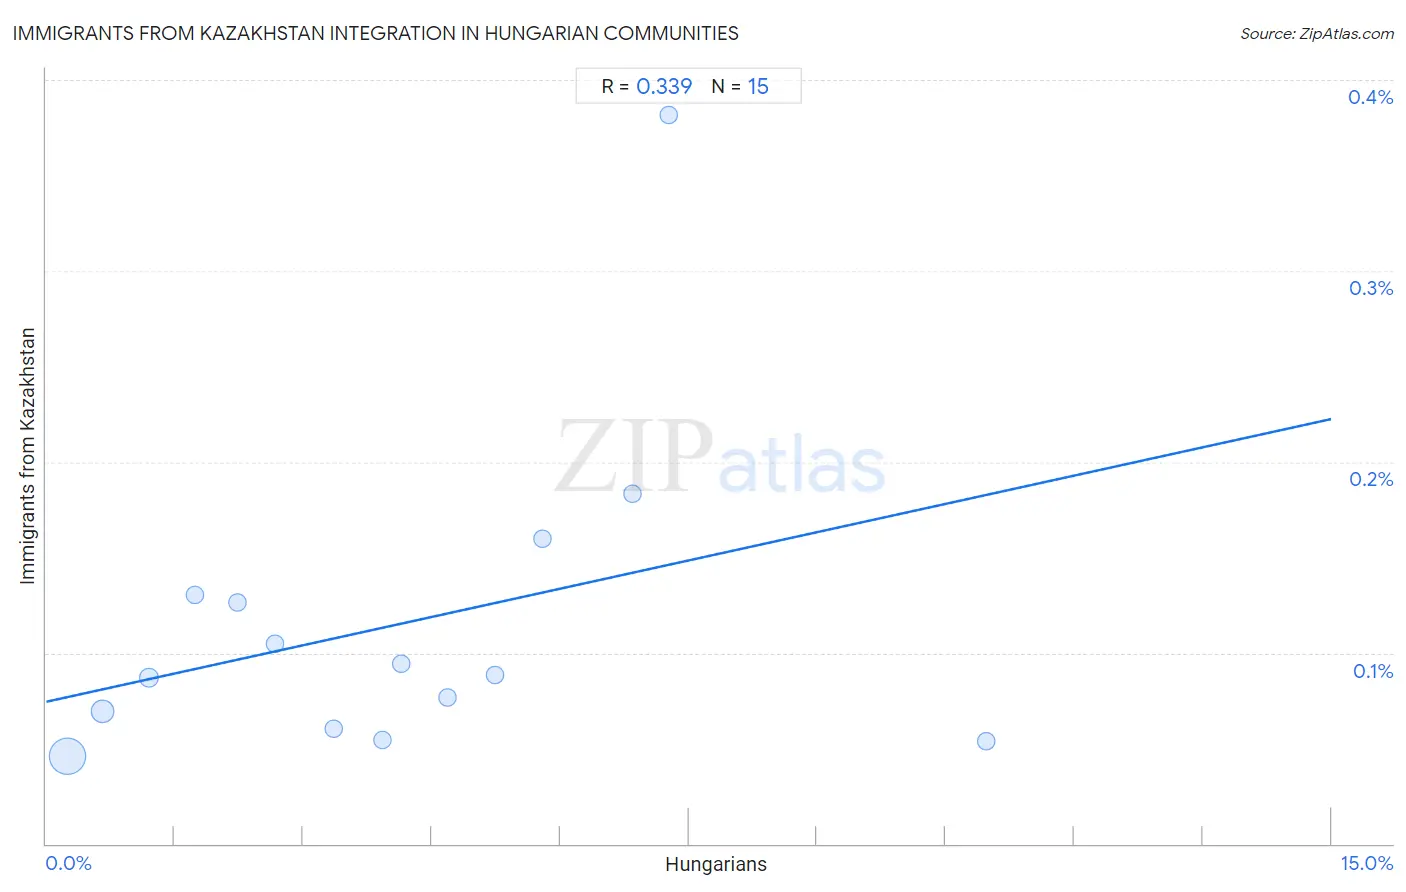 Hungarian Integration in Immigrants from Kazakhstan Communities